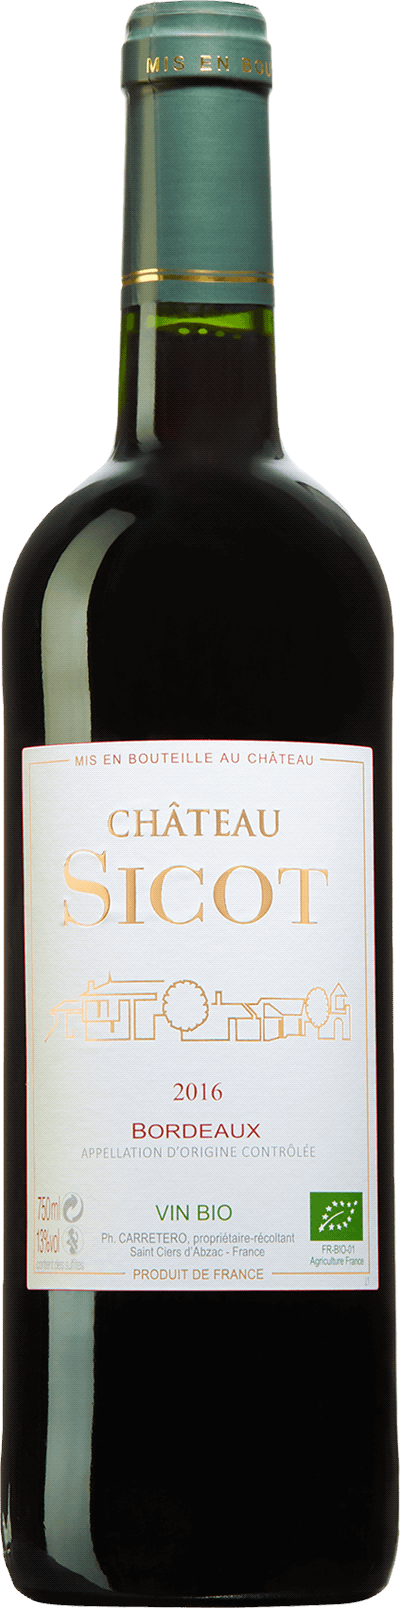 Château Sicot 